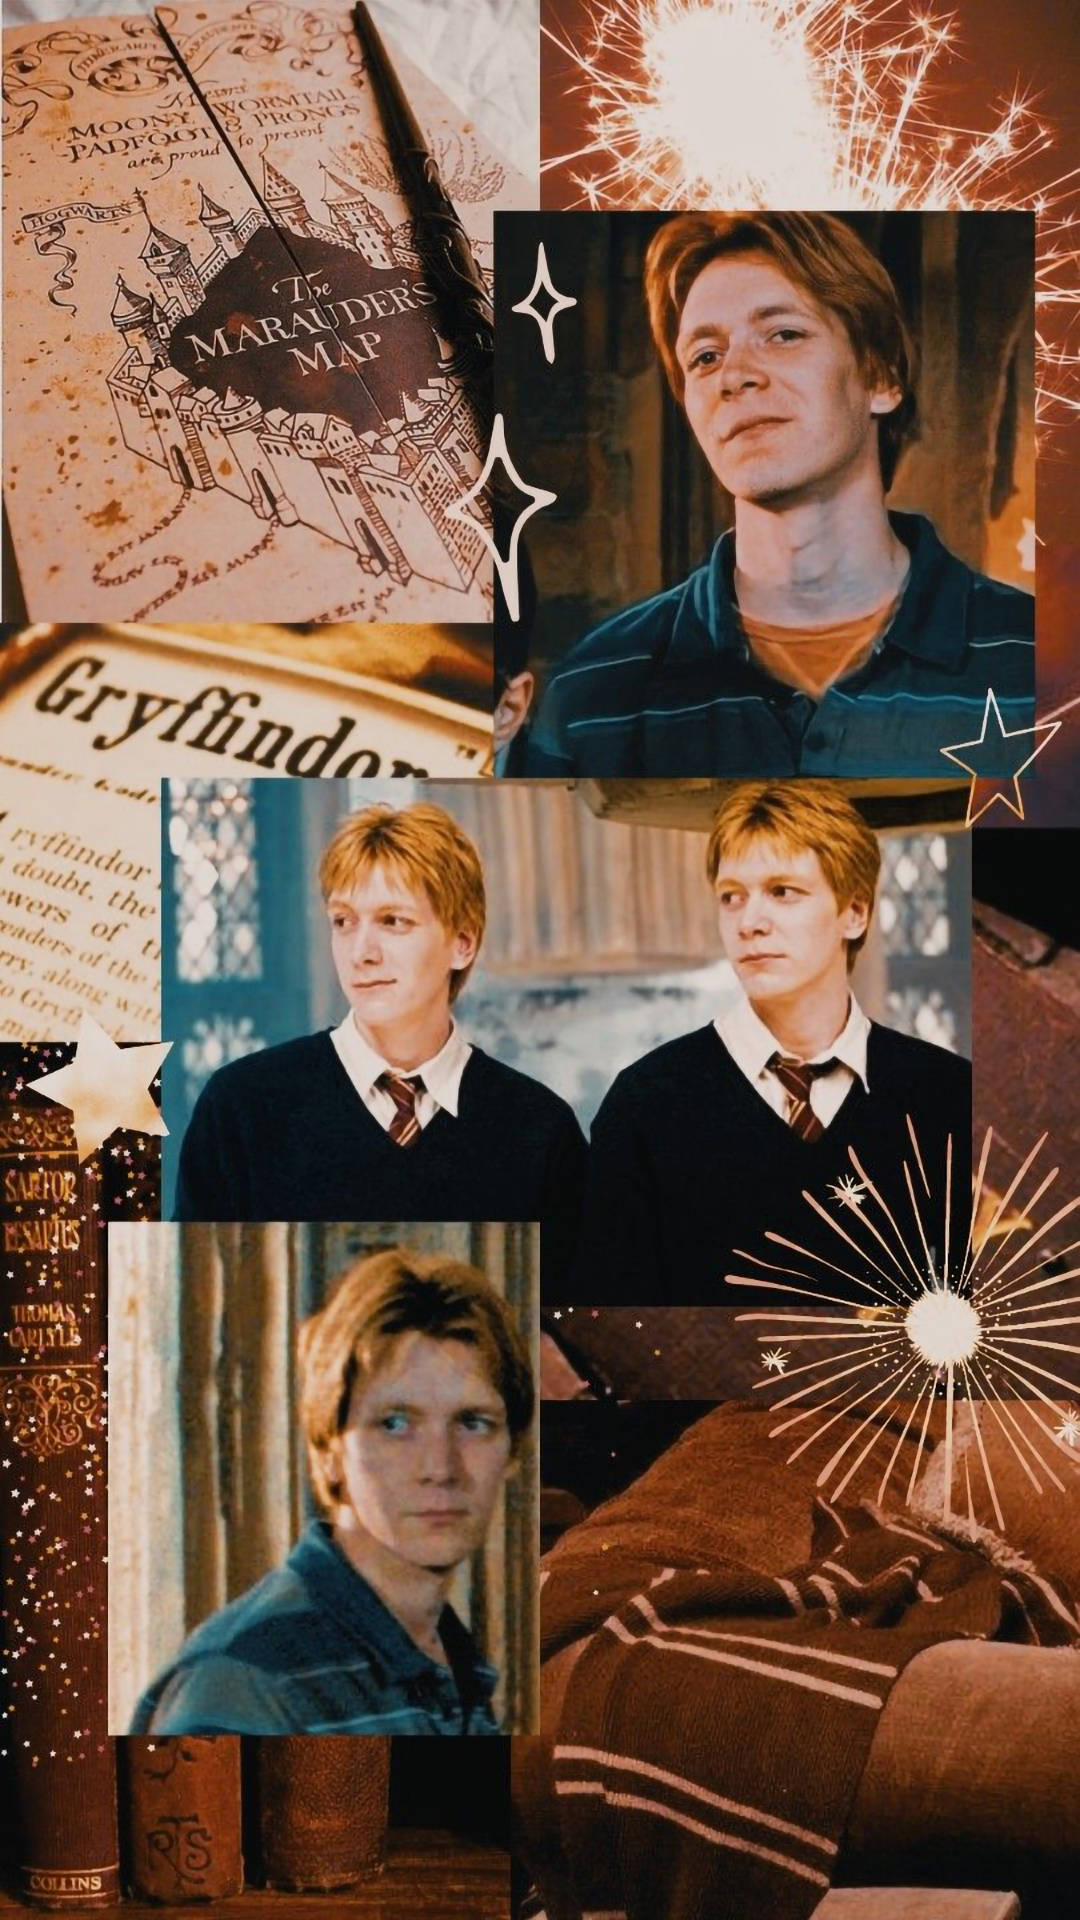 Aesthetic Harry Potter Weasley Twins